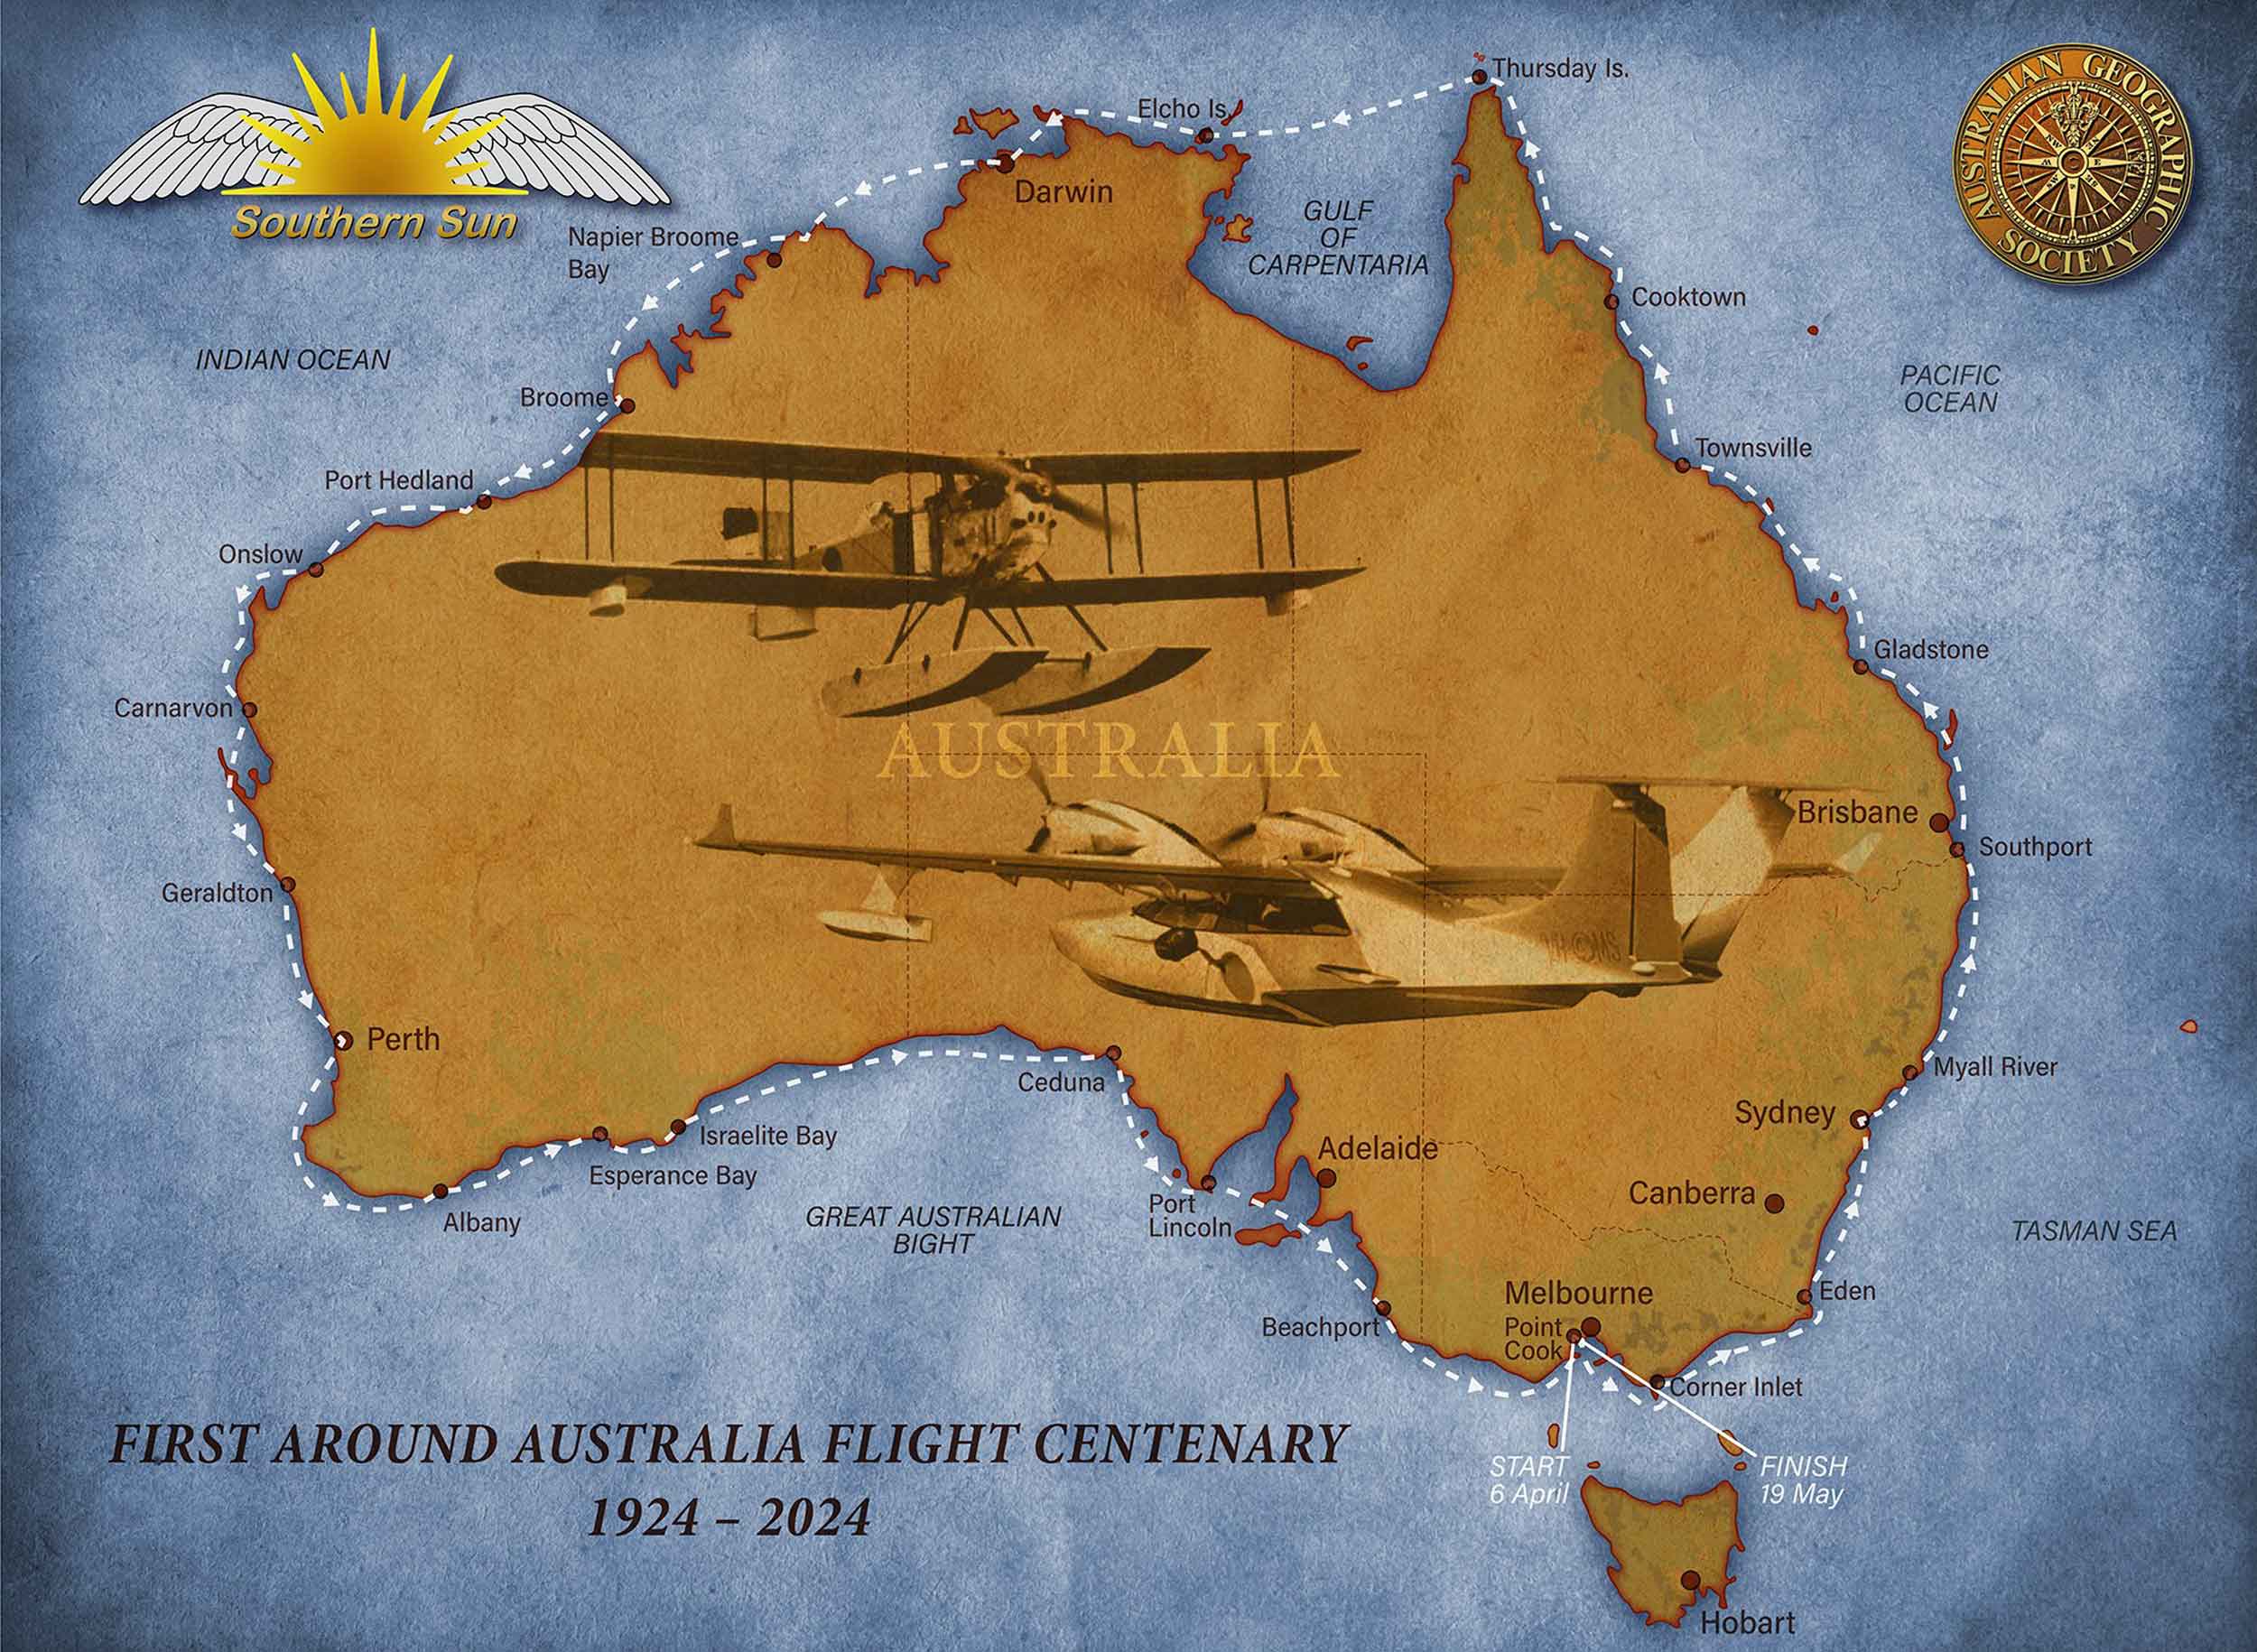 Mike's route around the coastline of Australia mimicks the original flight 100 years ago. Image: Mike Smith